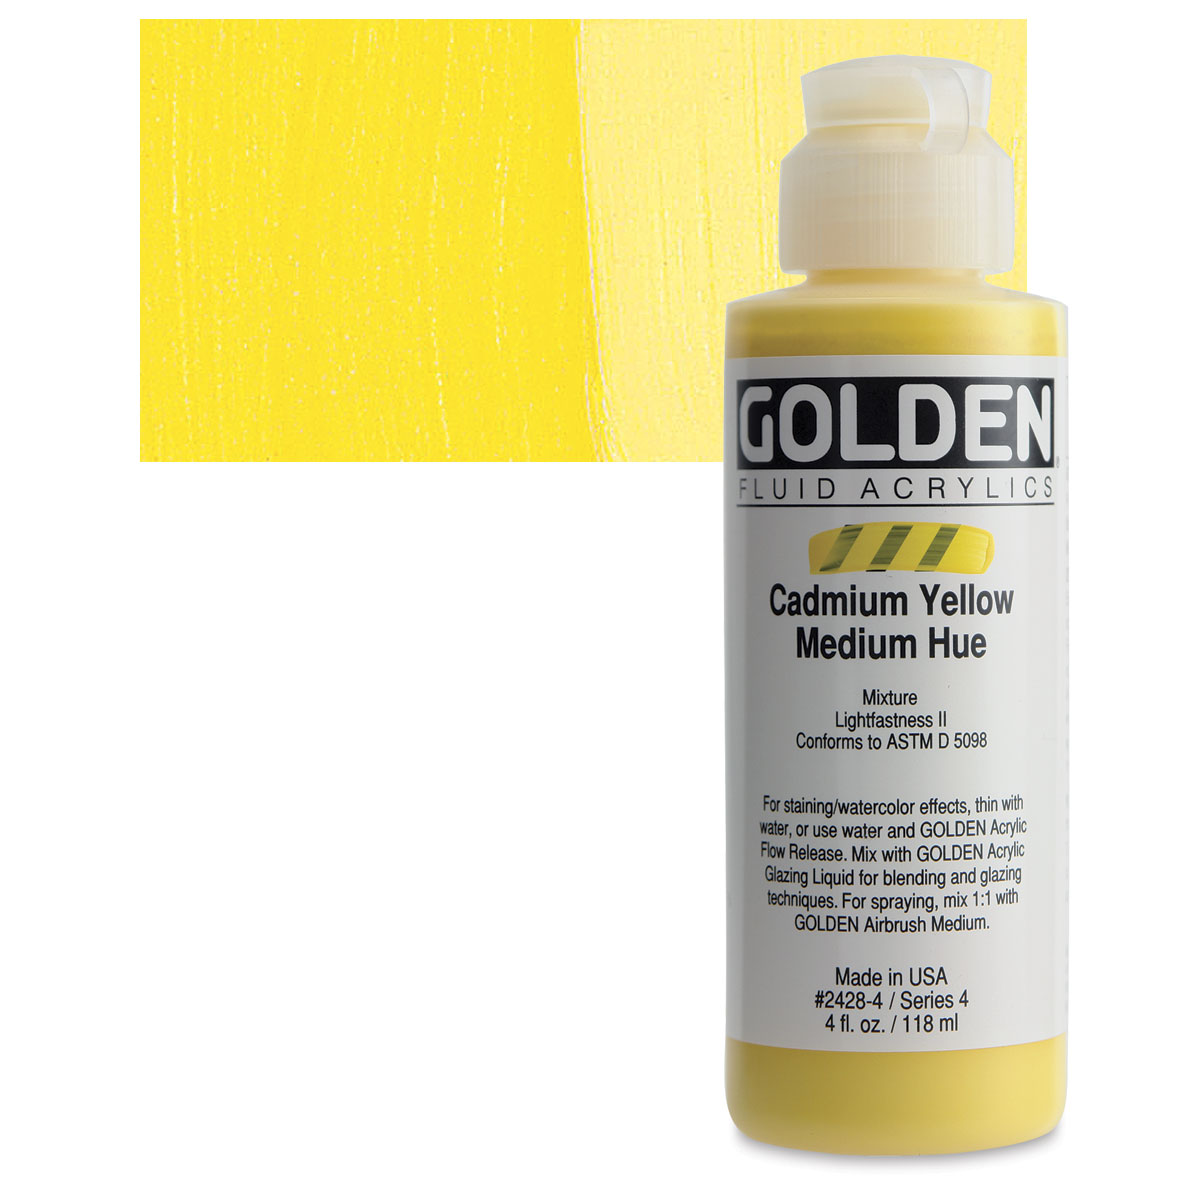 Golden Fluid Acrylic 1oz Cadmium Yellow Medium Hue